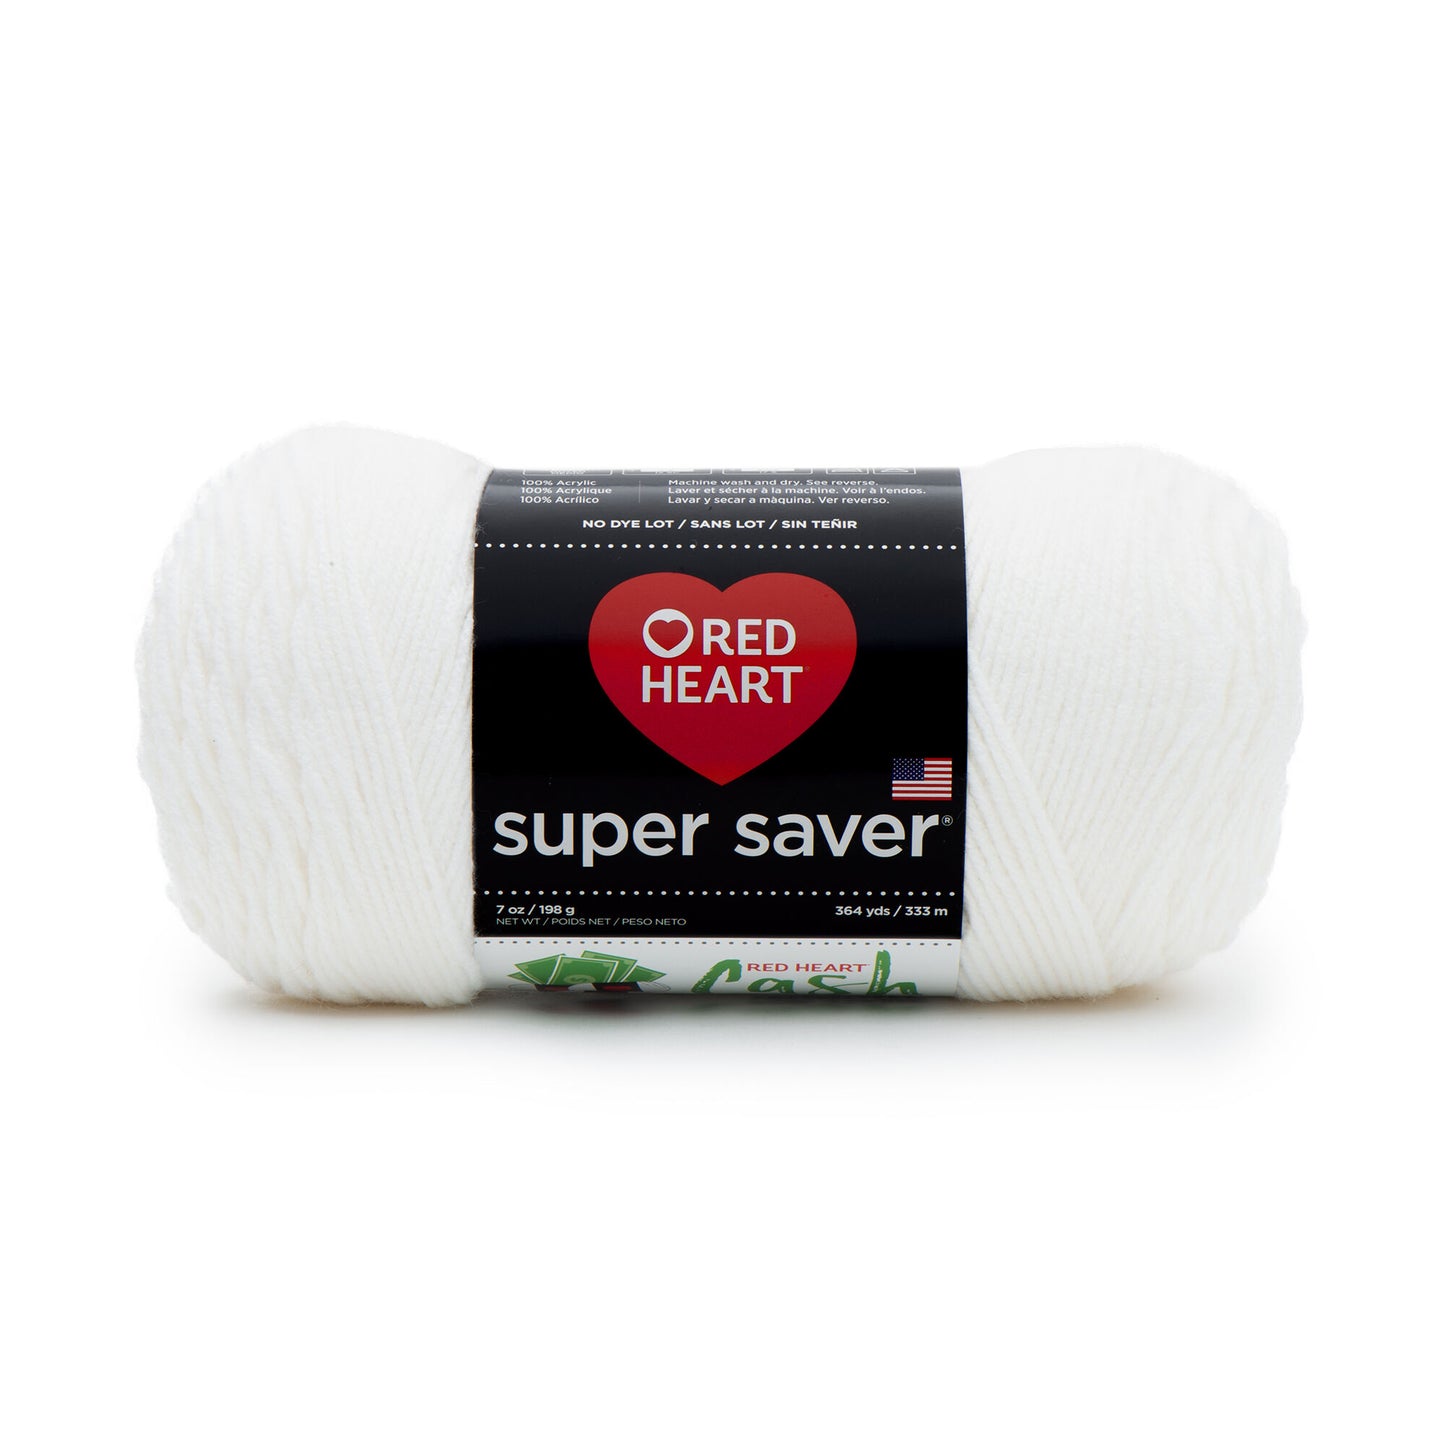 Red Heart Super Saver Yarn Medium Worsted 7 oz